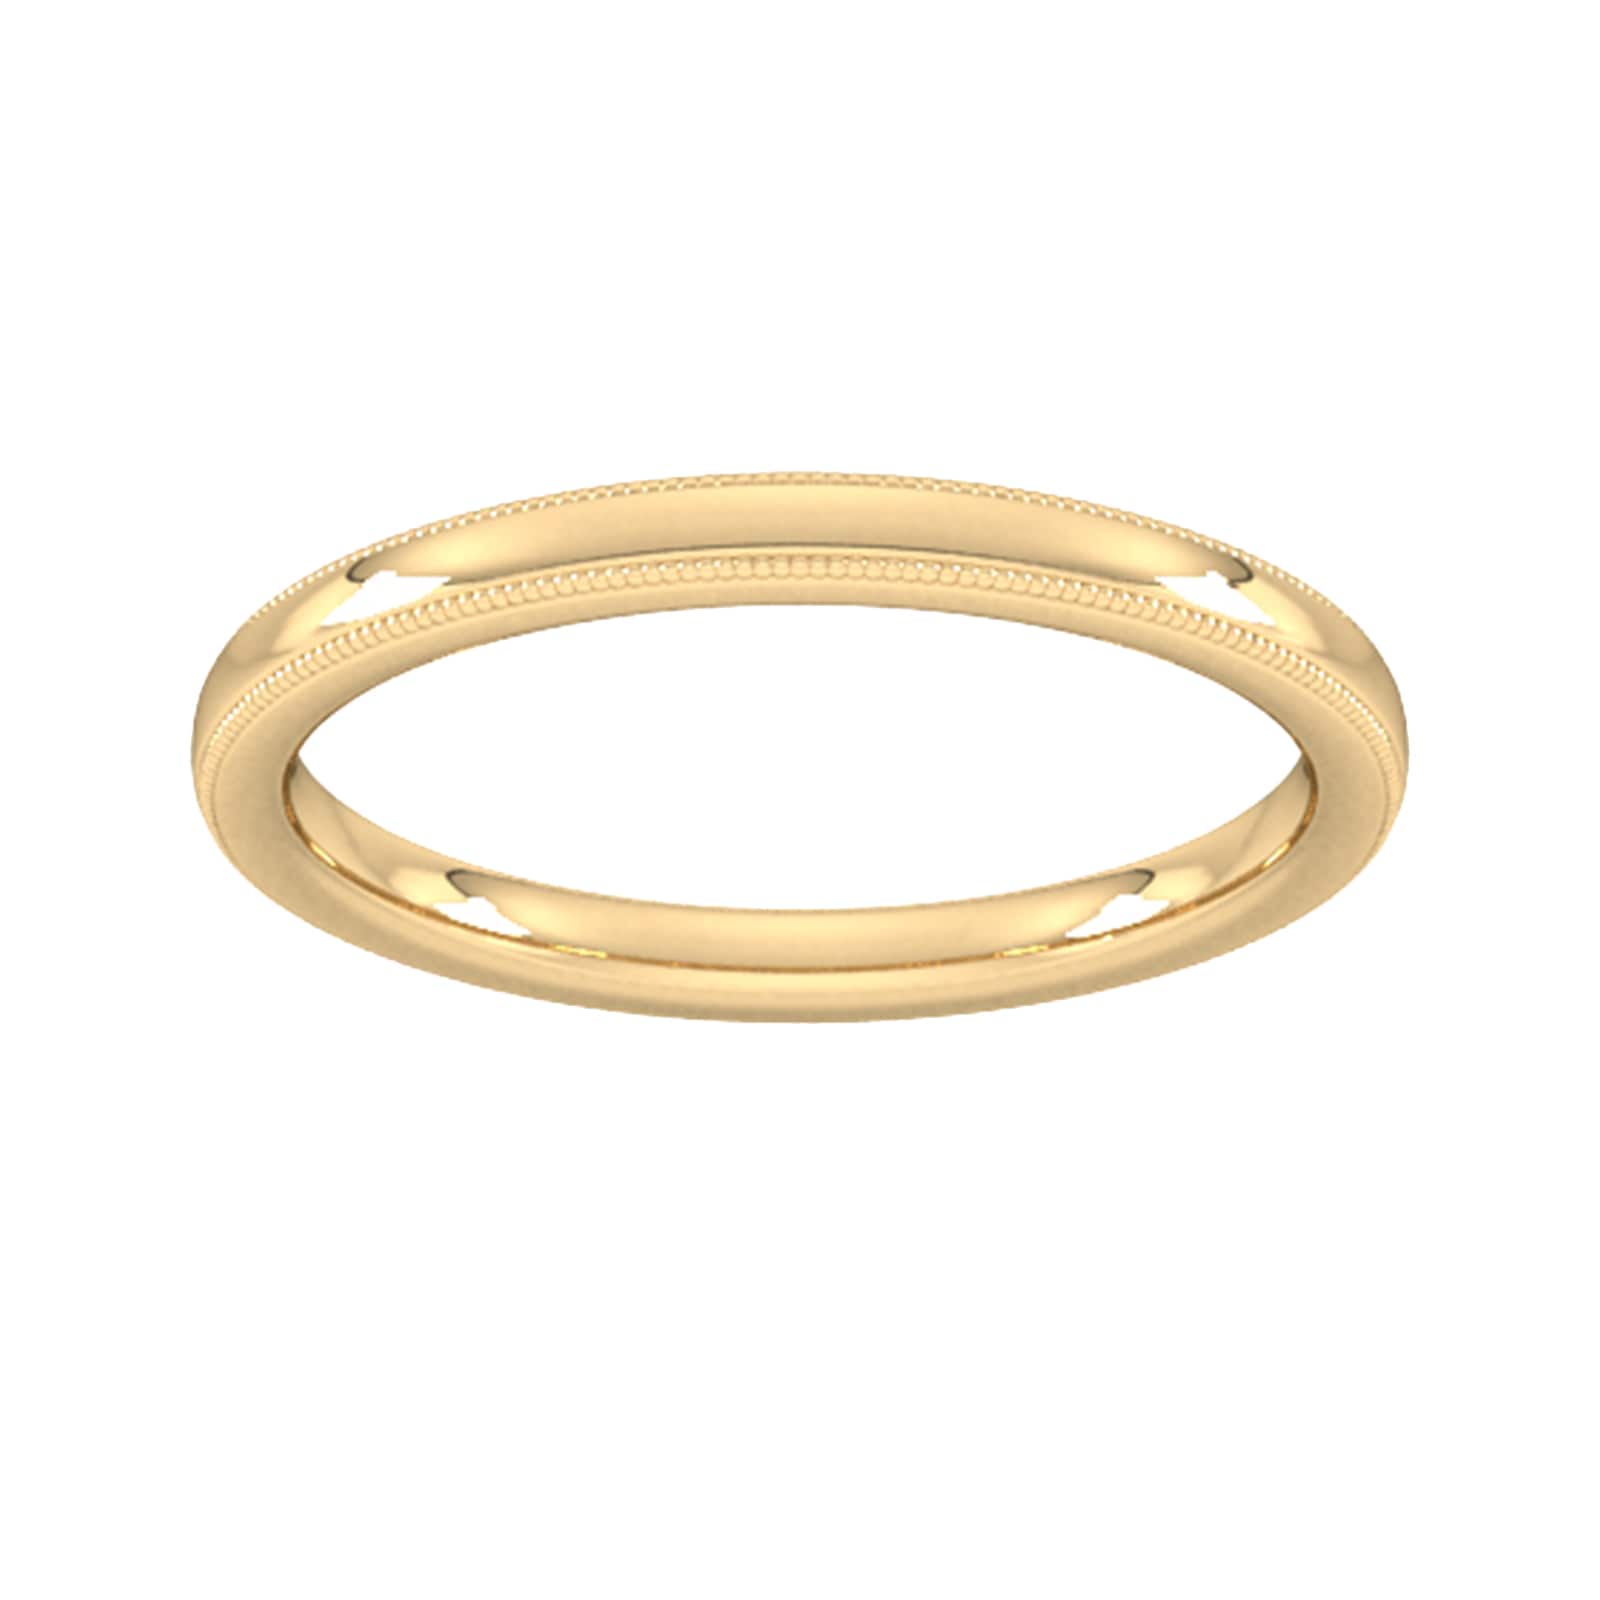 2mm Traditional Court Standard Milgrain Edge Wedding Ring In 18 Carat Yellow Gold - Ring Size K